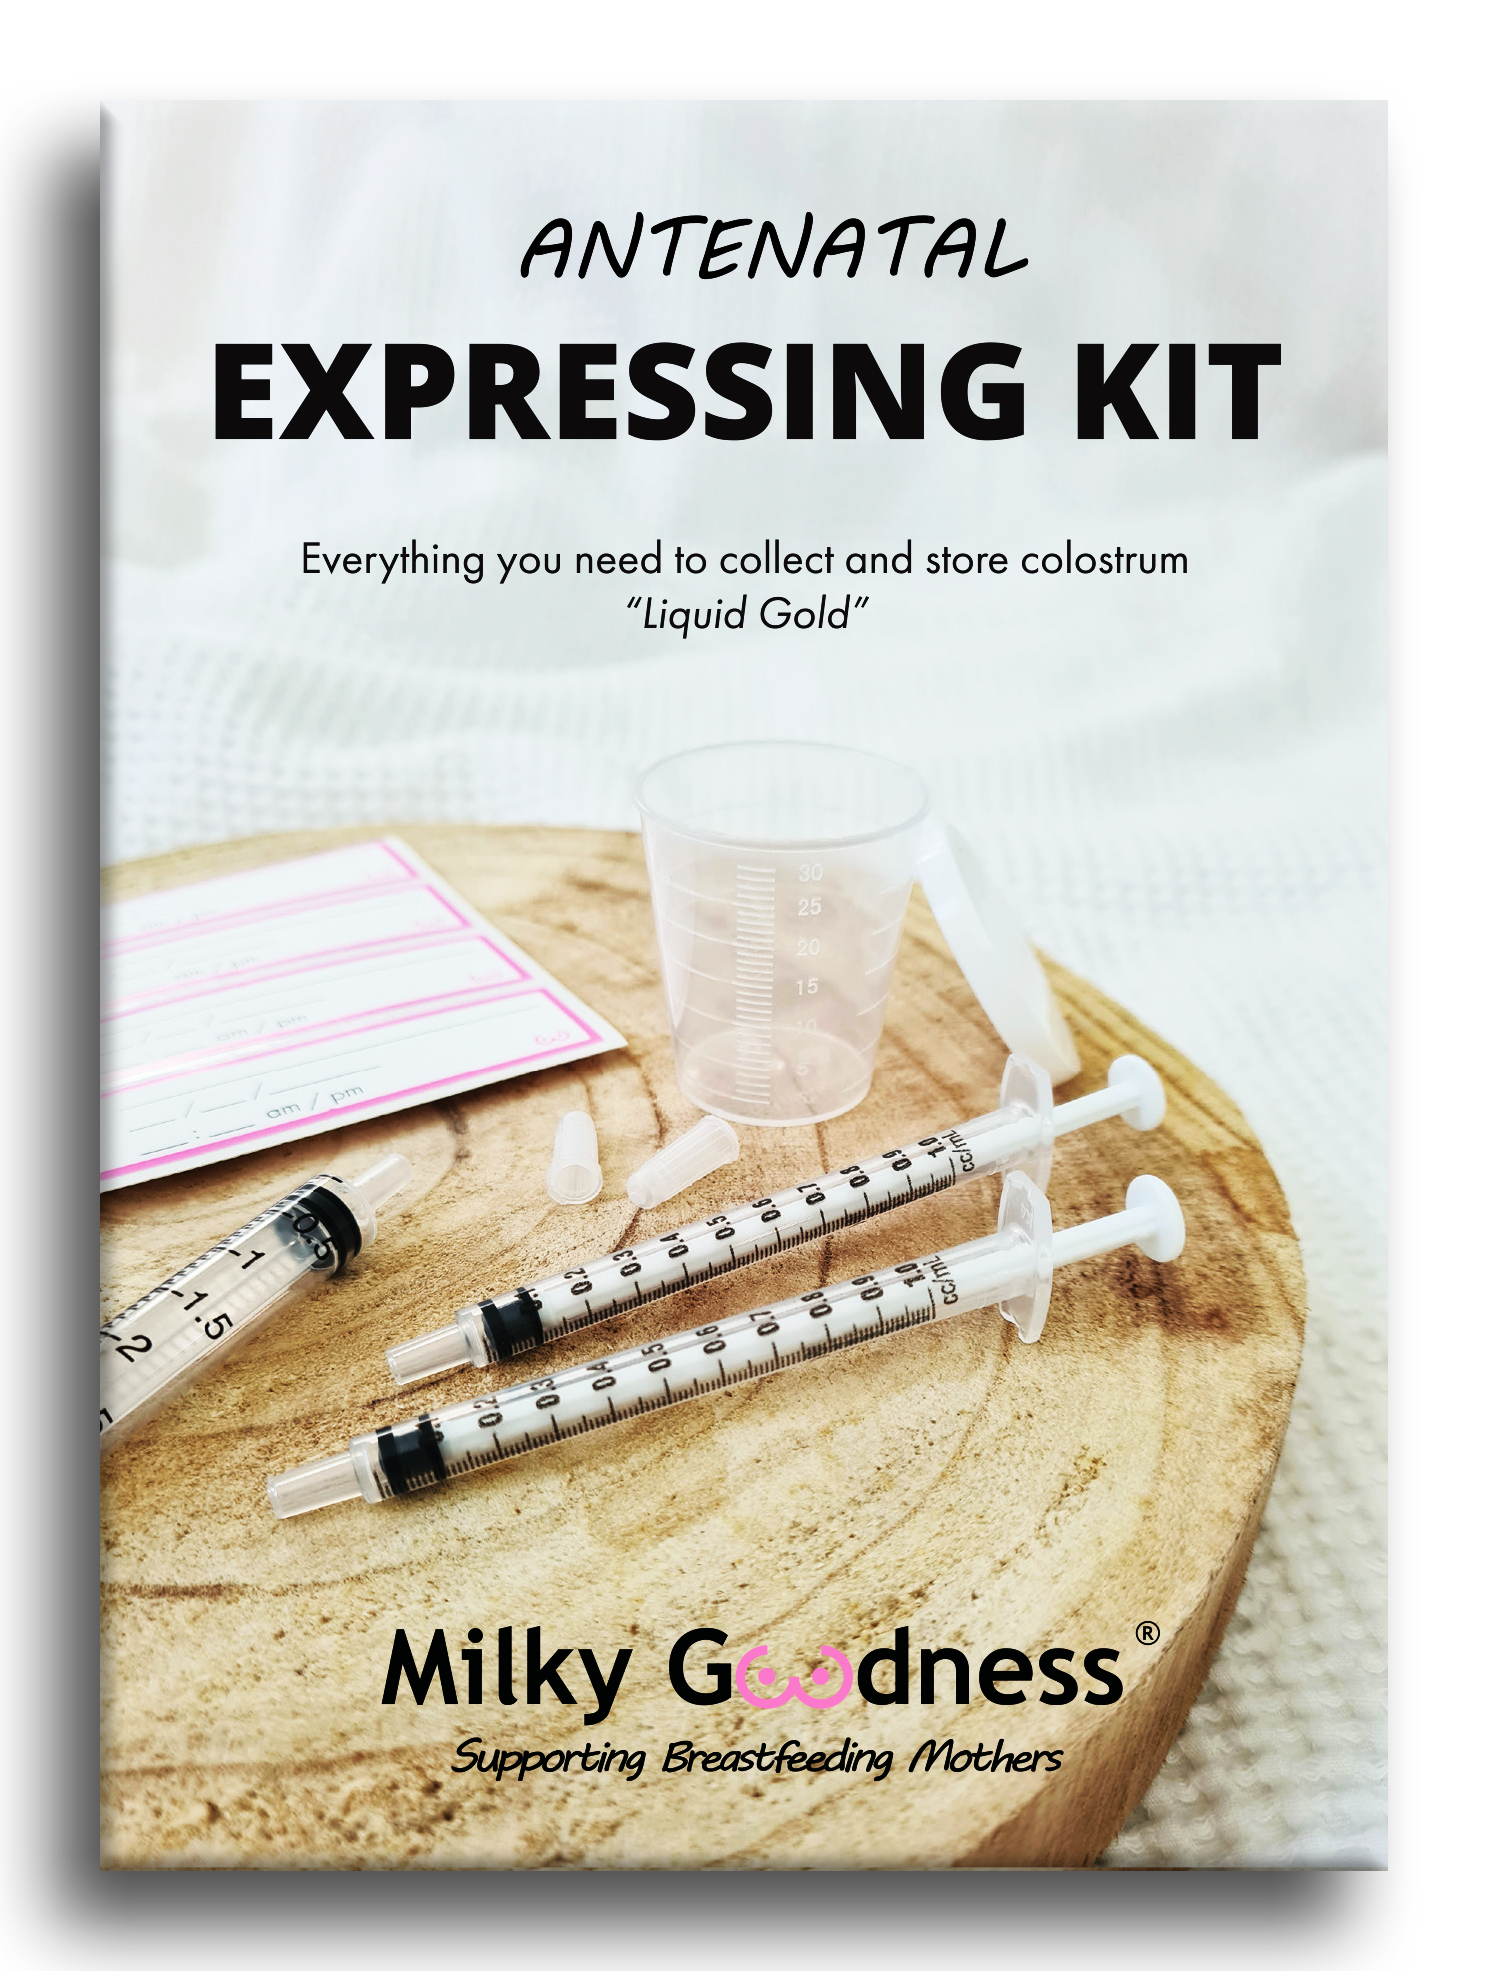 Antenatal Colostrum Expressing Kit | Milky Goodness